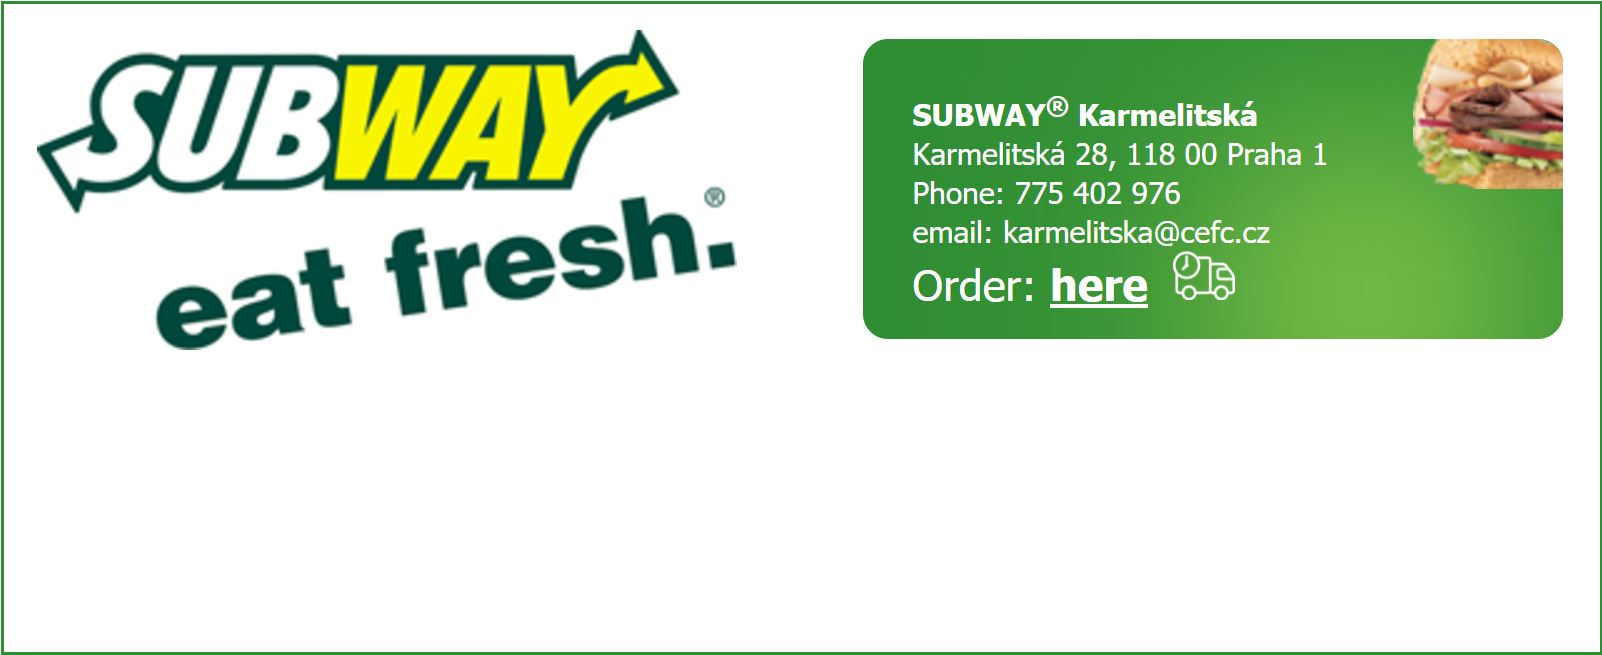 subway-delivery1c